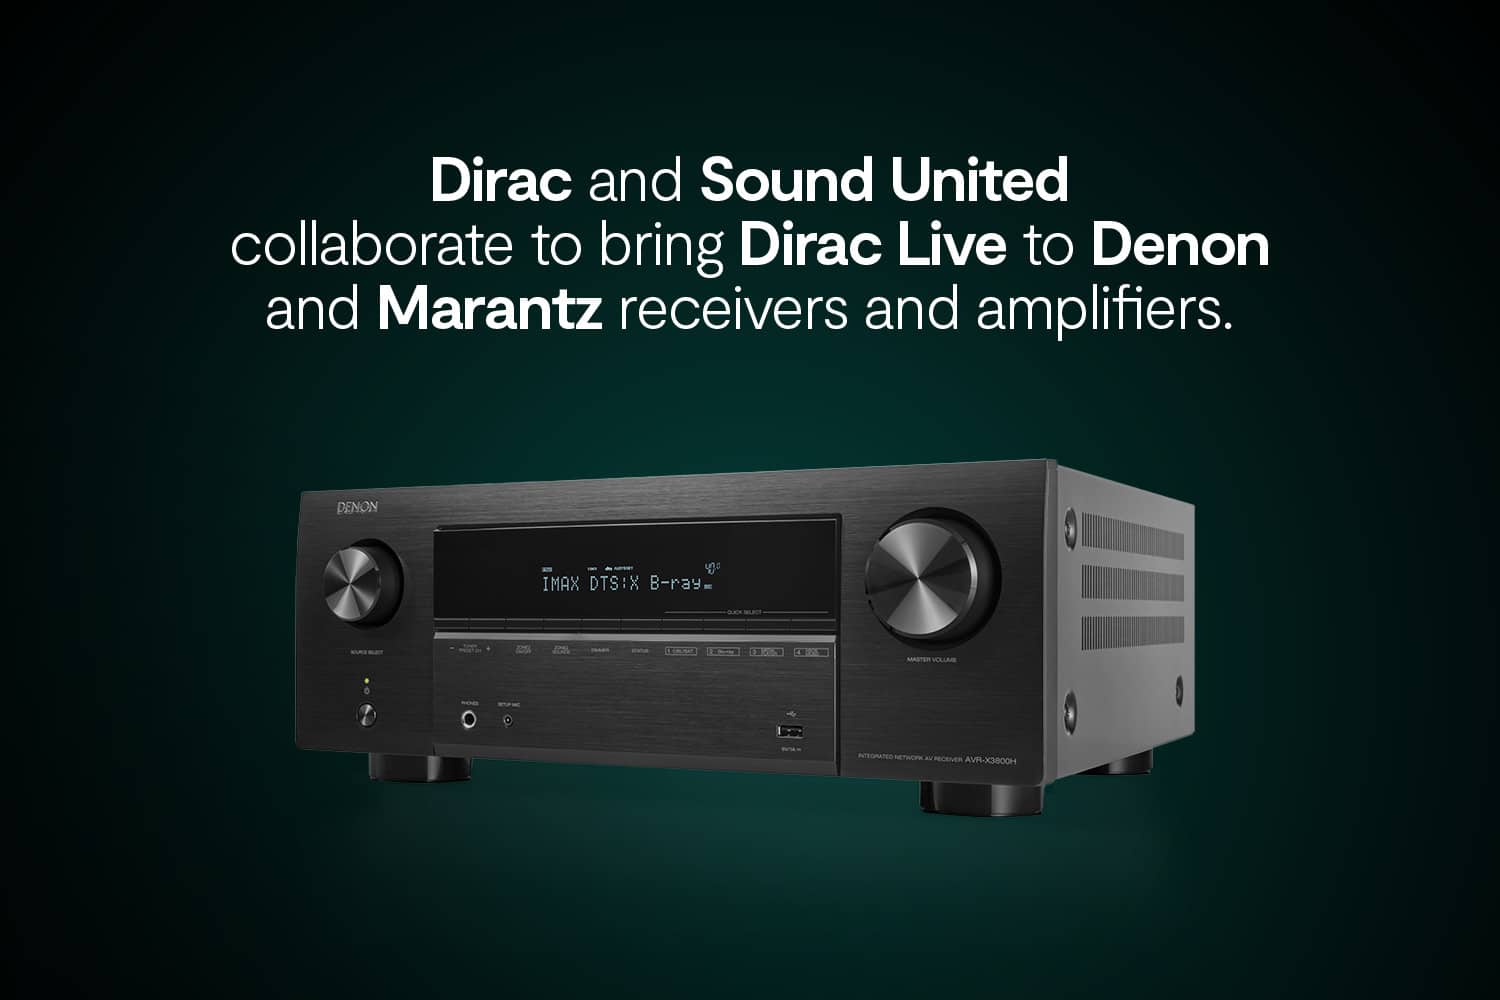 Gedragen geleidelijk consensus Dirac and Sound United announce strategic collaboration to bring Dirac Live  to Denon and Marantz - Dirac